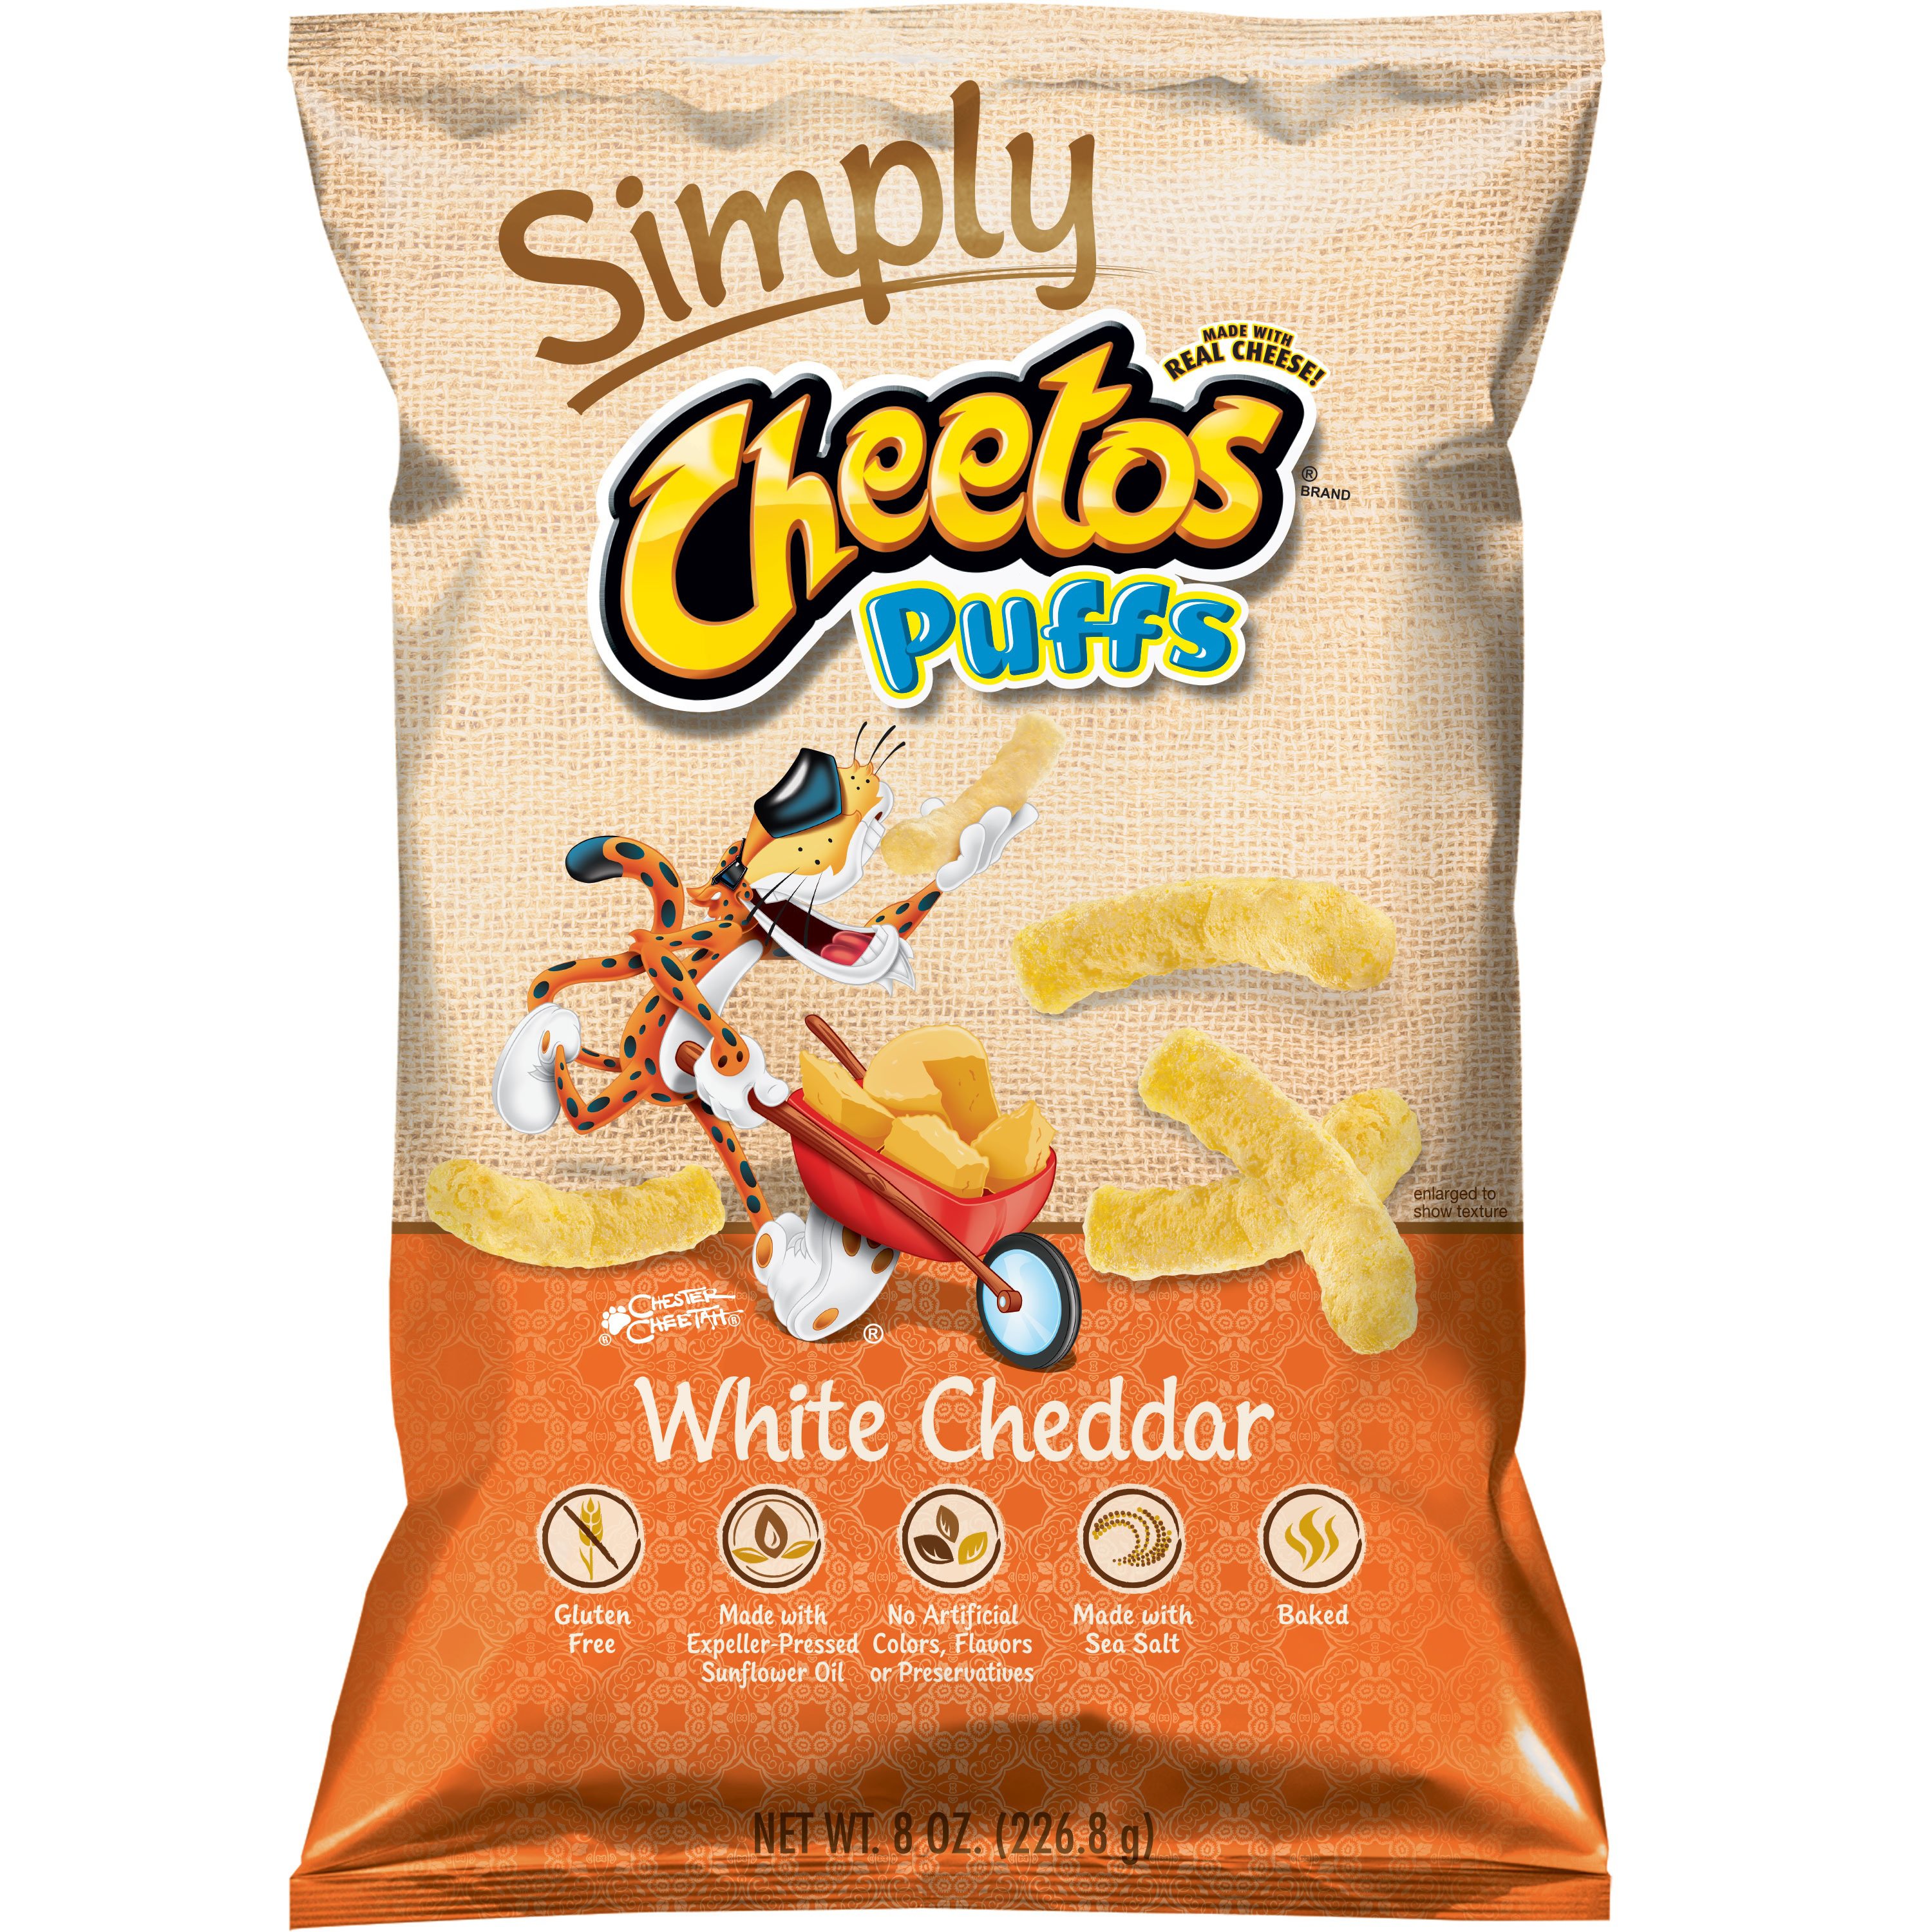 Cheetos Crunchy Cheddar Jalapeno Cheese Snacks, 3.5 oz 